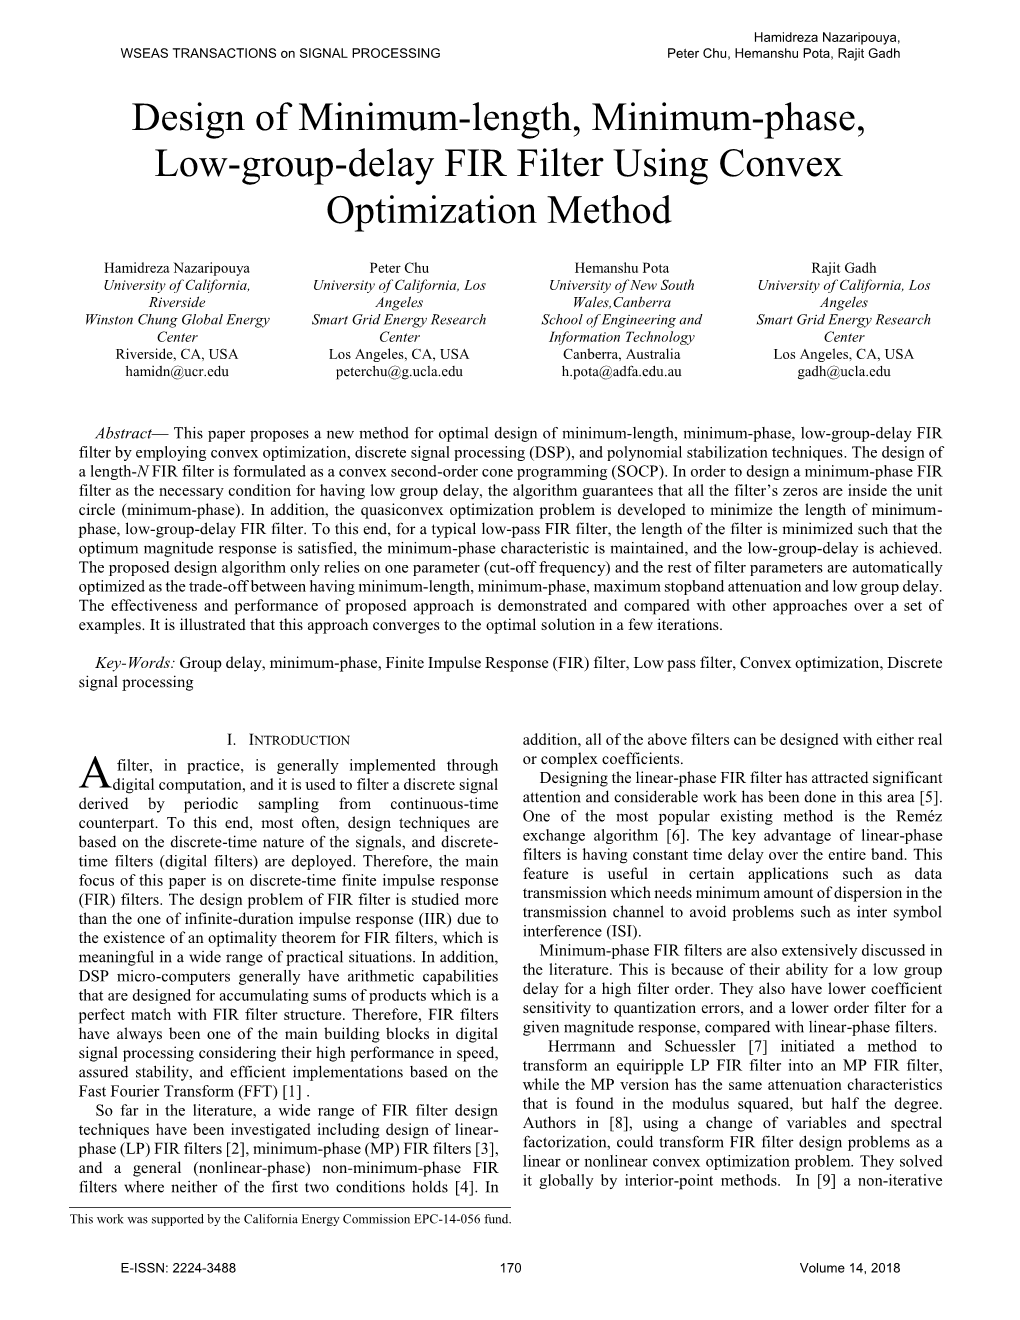 Design of Minimum-Length, Minimum-Phase, Low-Group-Delay FIR Filter Using Convex Optimization Method